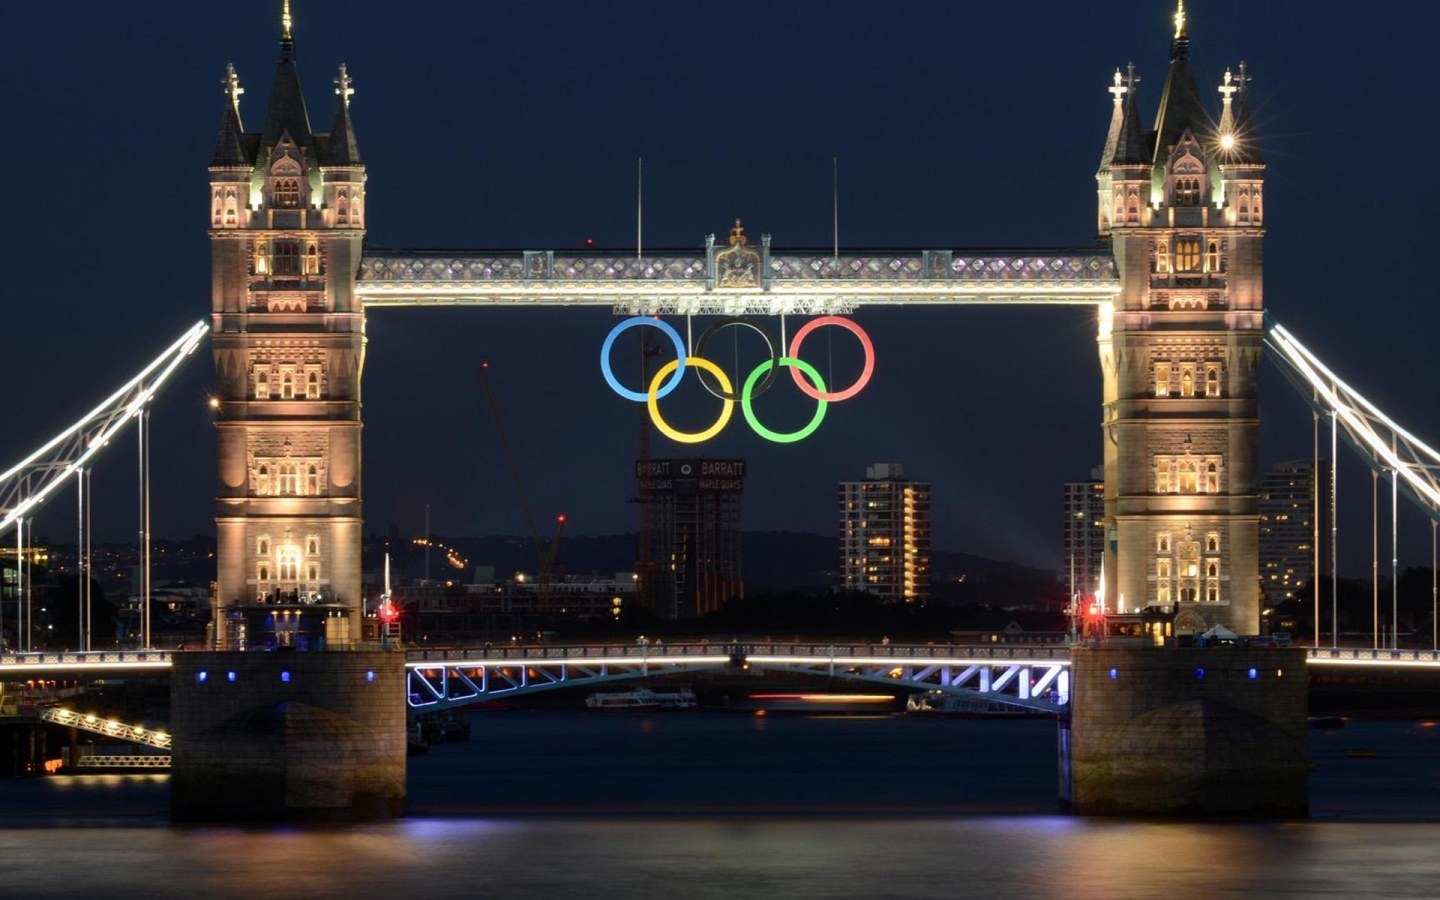 London Bridge 2012 Olympics for 1440 x 900 widescreen resolution